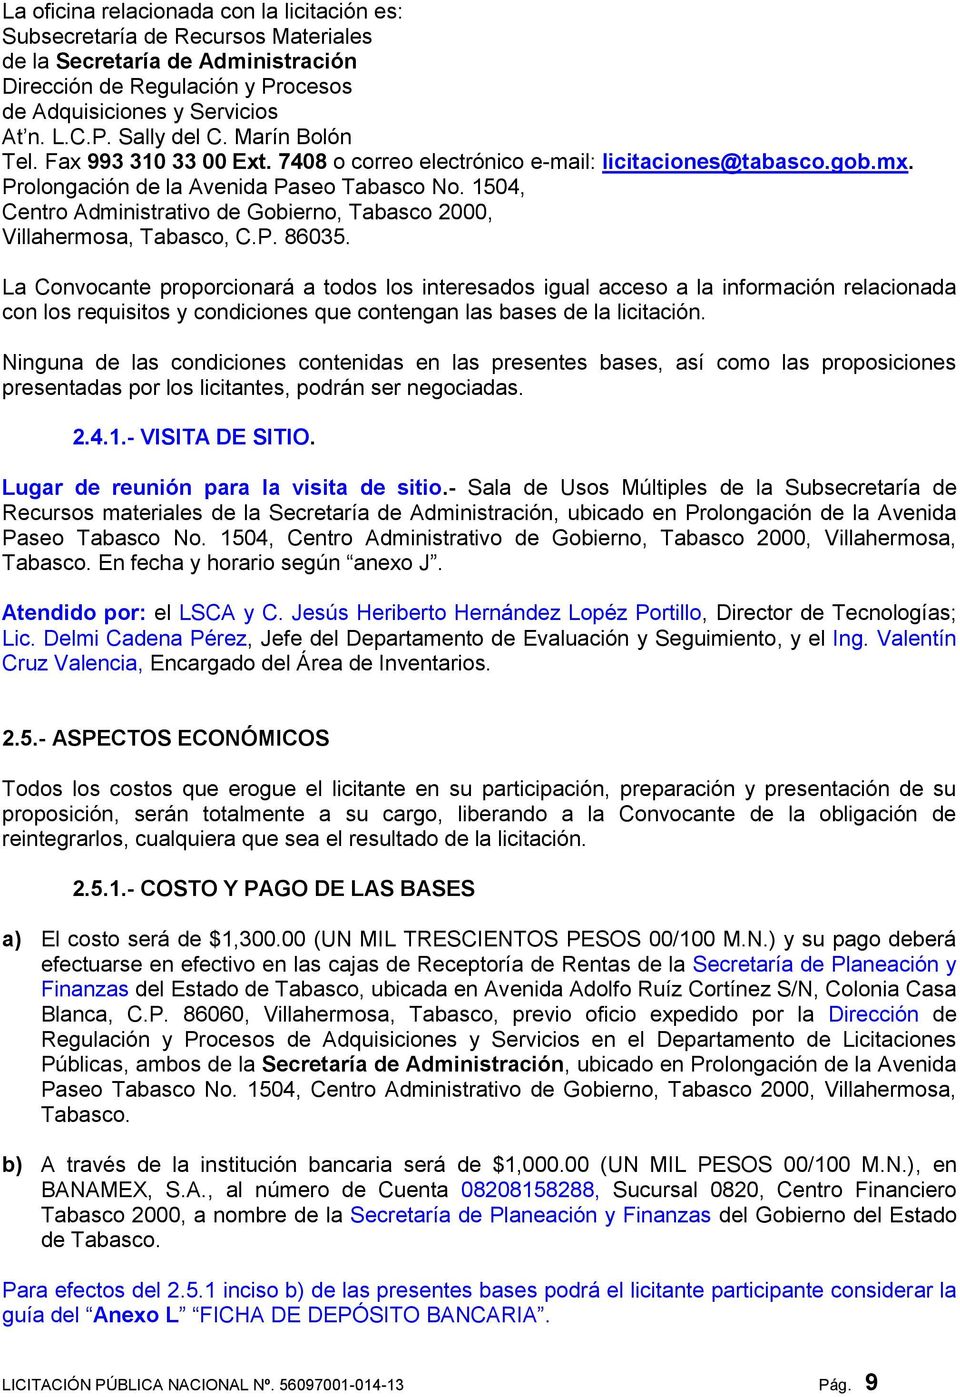 1504, Centro Administrativo de Gobierno, Tabasco 2000, Villahermosa, Tabasco, C.P. 86035.